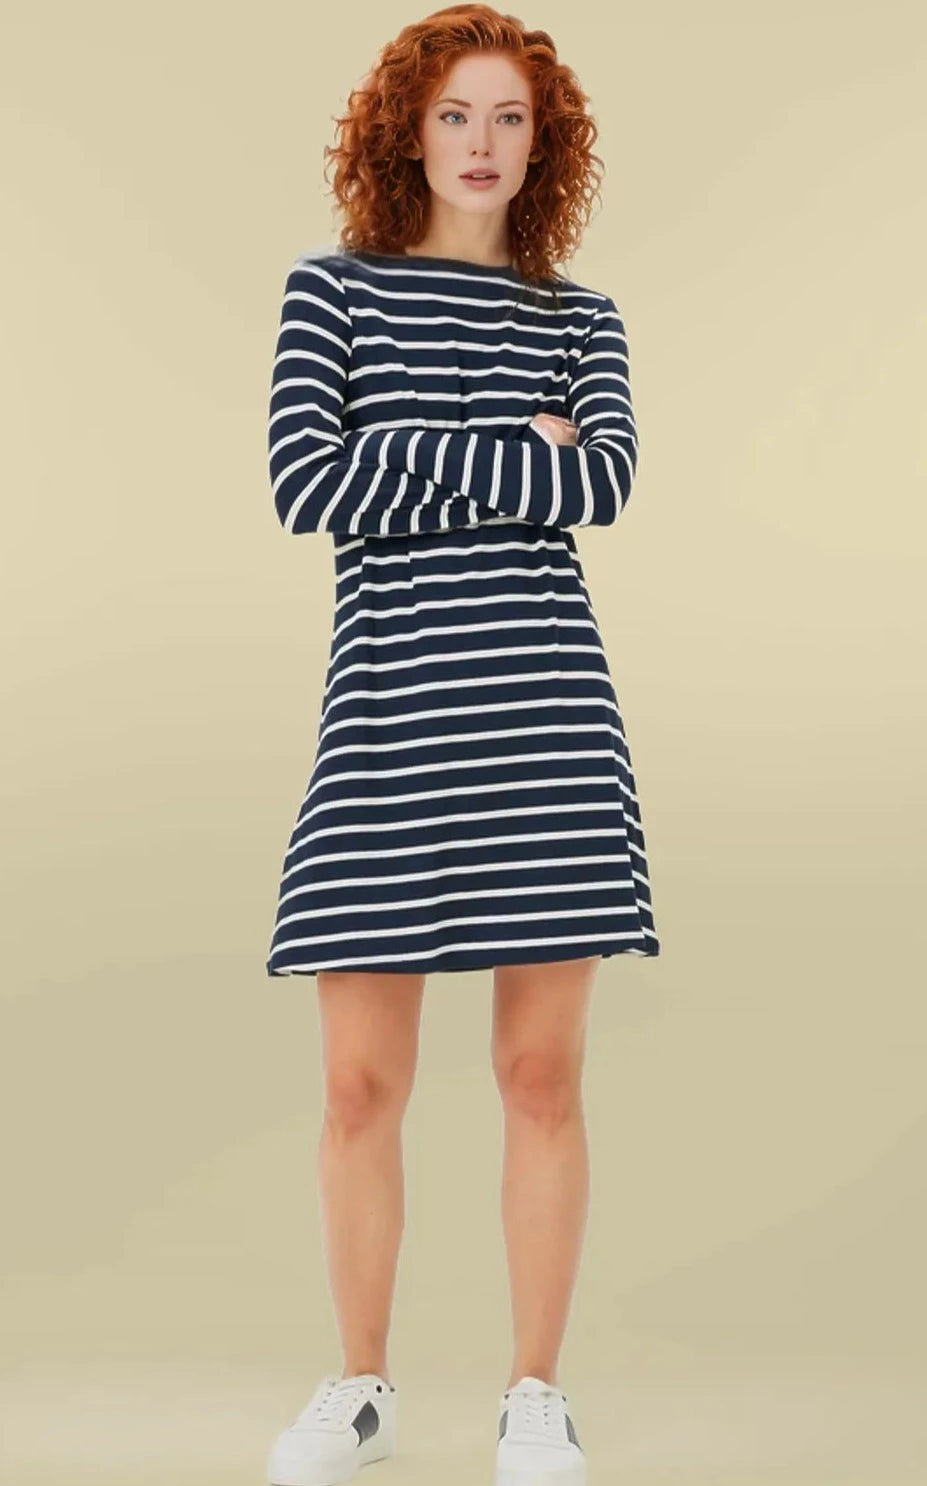 M&S Nautical Striped Jersey Dress